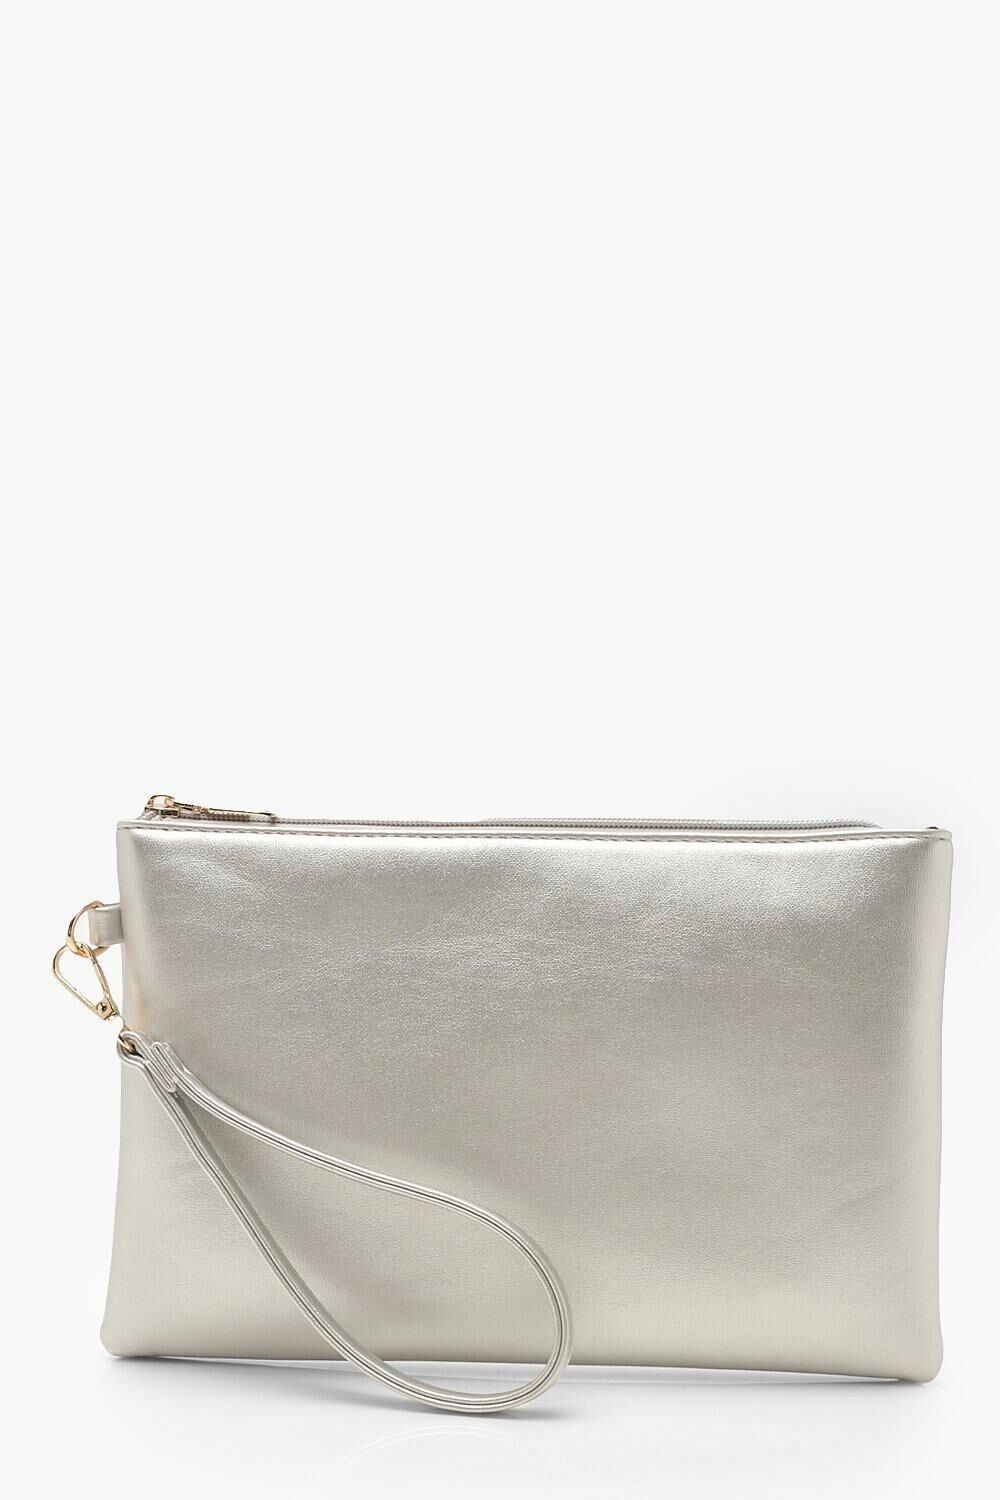 Boohoo Metallic Smooth Pu Zip Top Clutch Bag- Grey  - Size: ONE SIZE